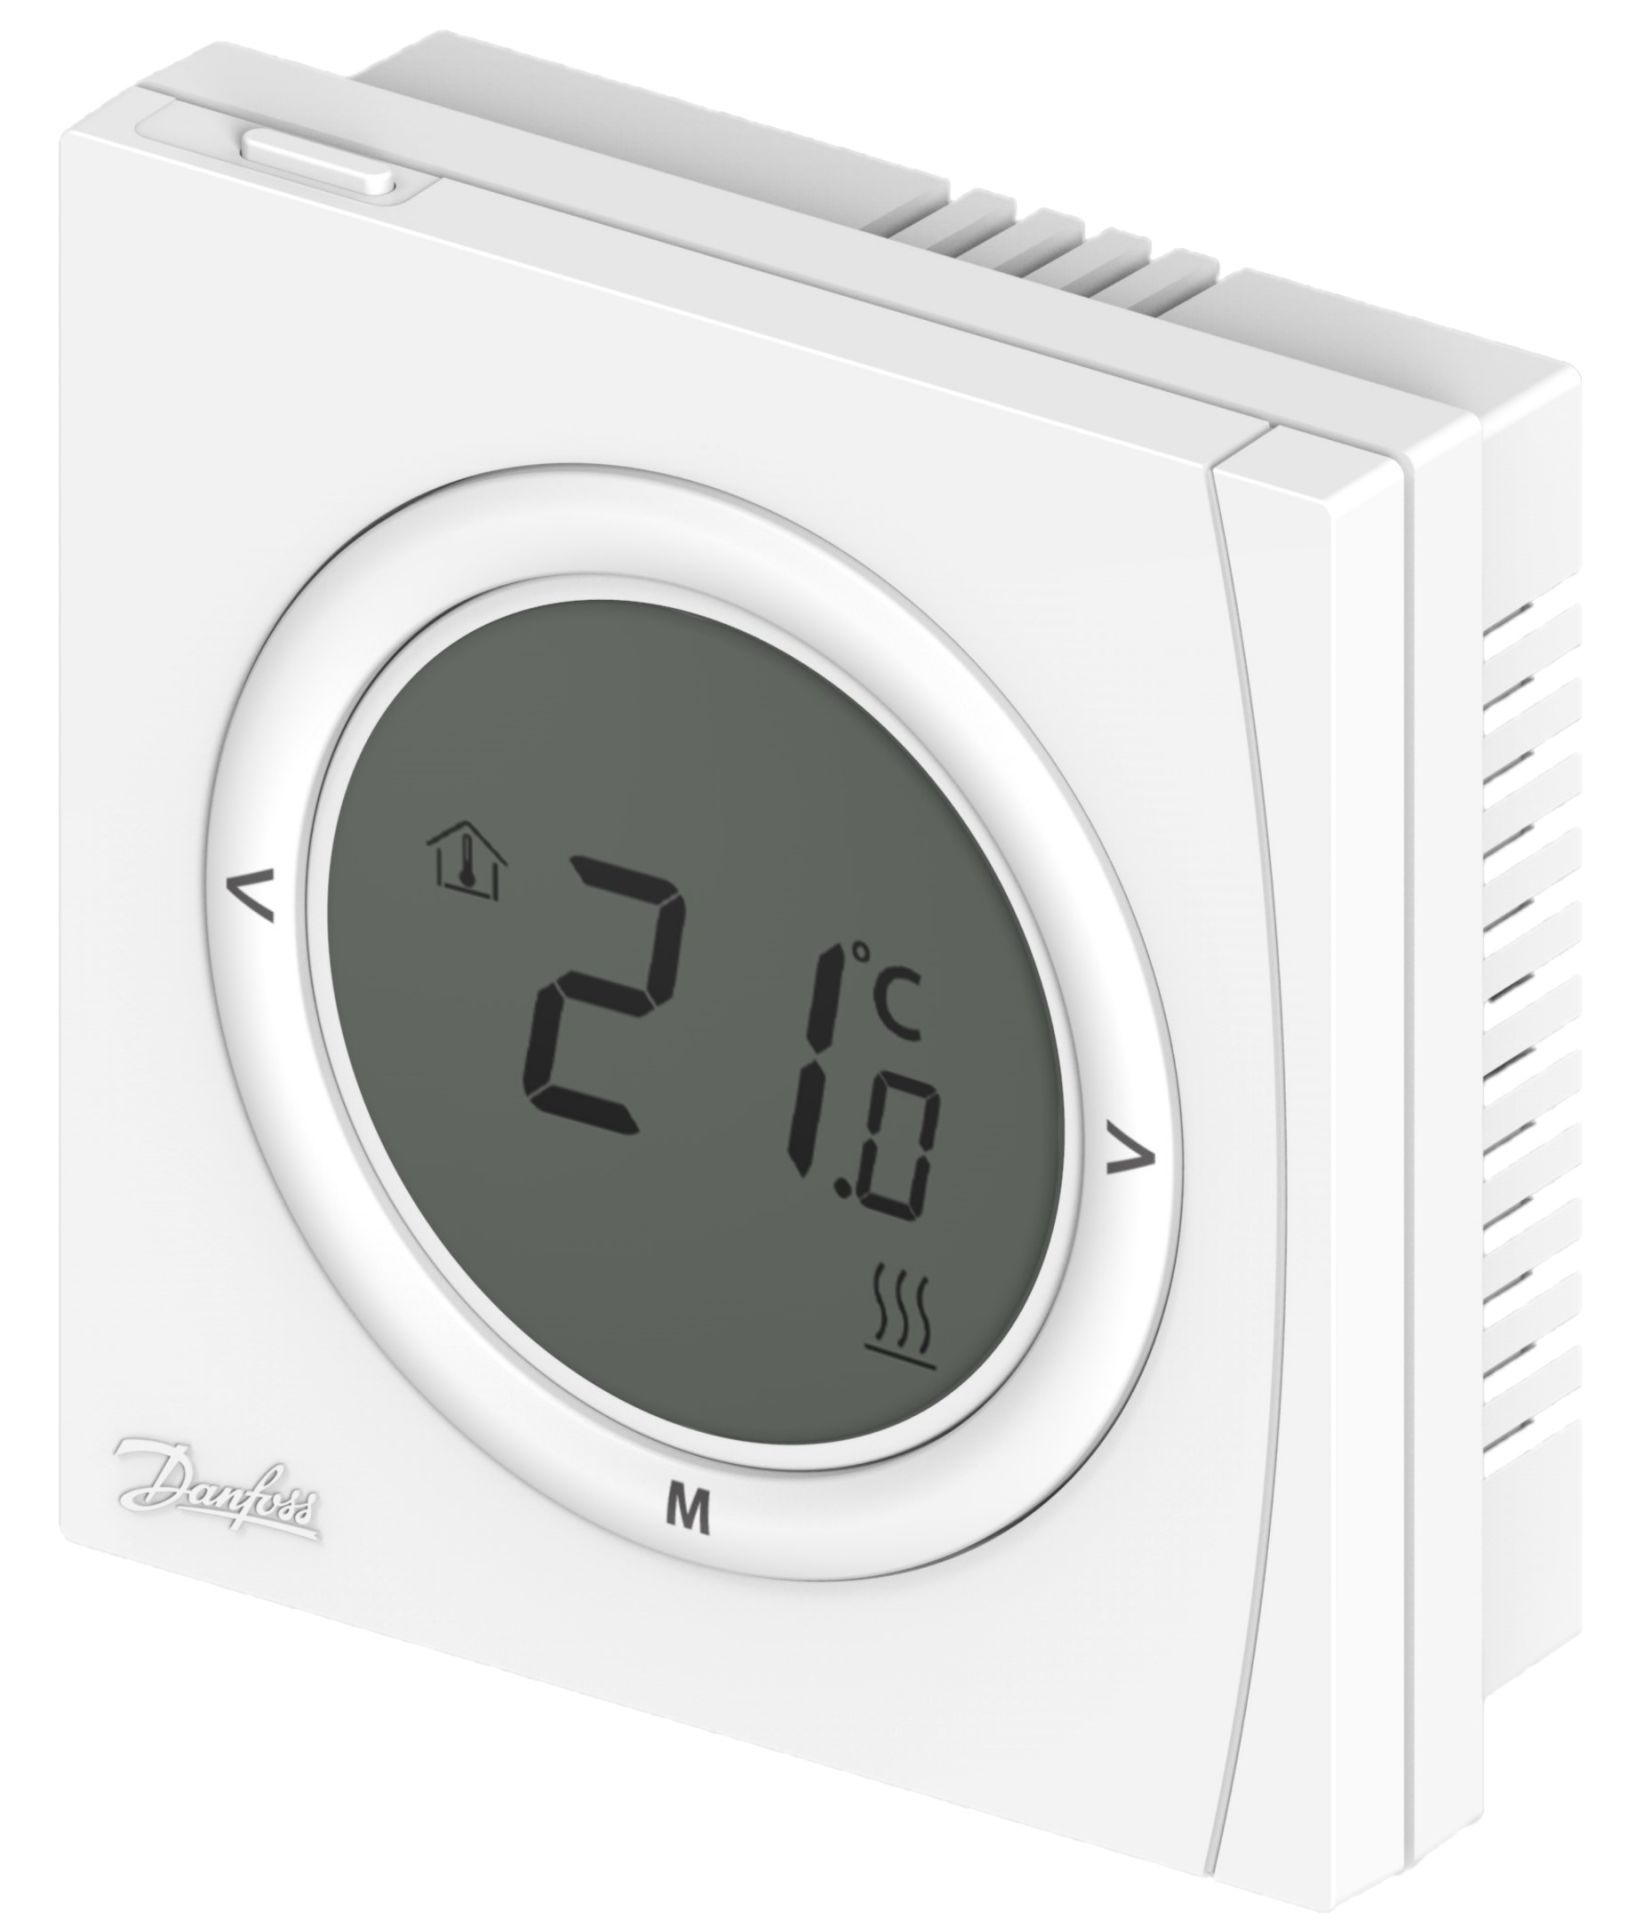 Danfoss RET 2001 M Dijital oda termostatı, 5-35 °C, 230V Danfoss Termostat